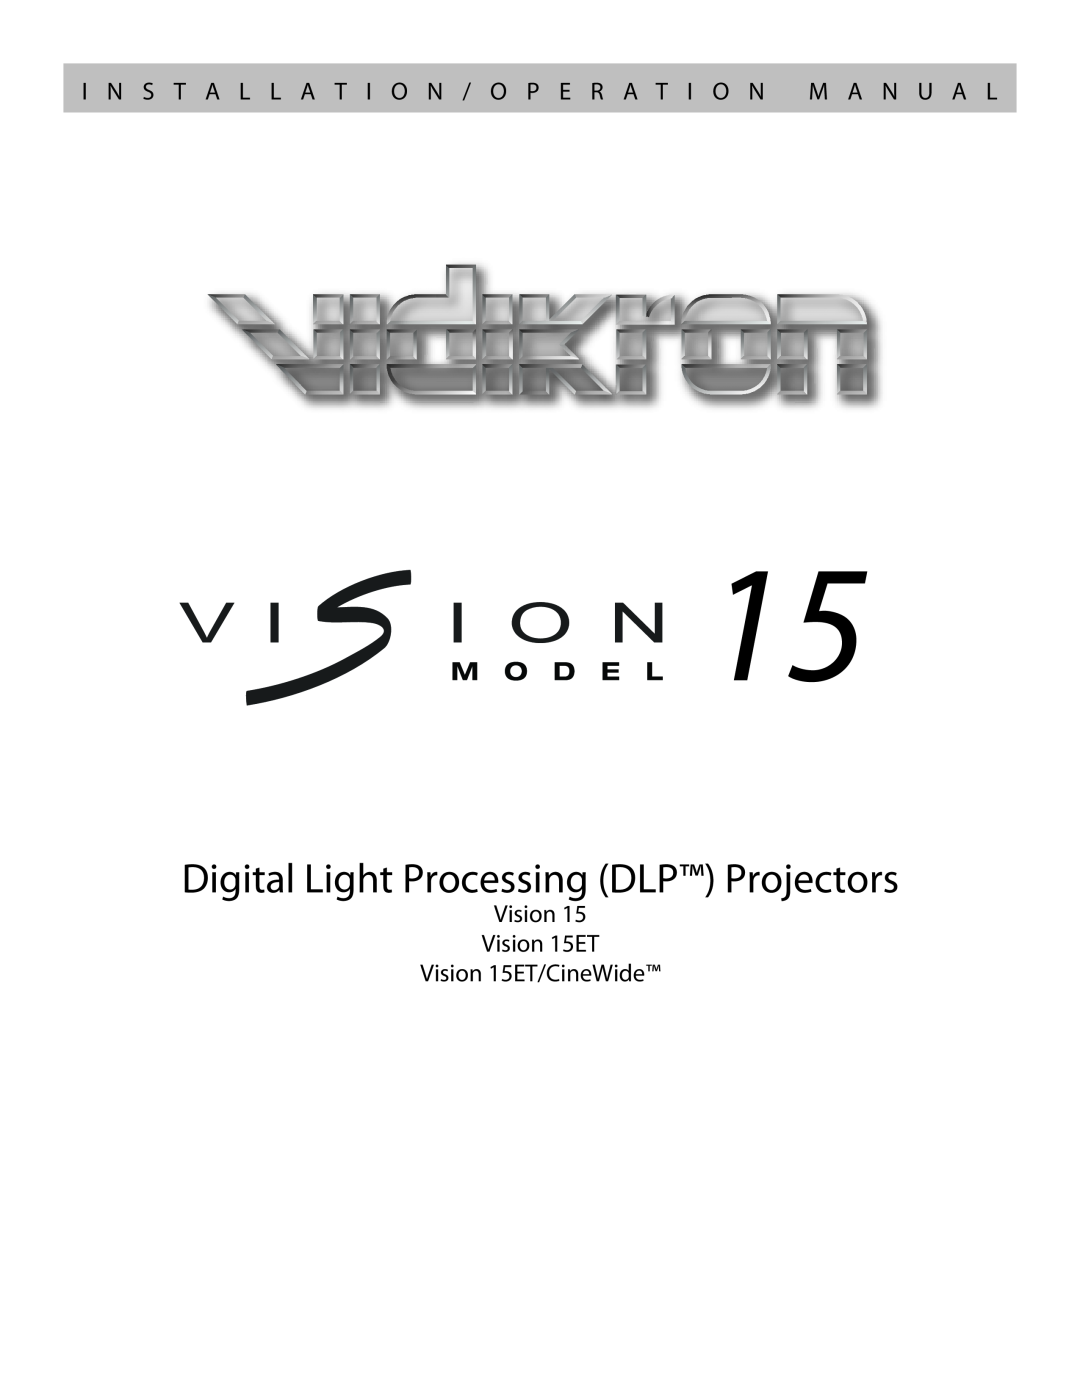 Vidikron operation manual Digital Light Processing DLP Projectors, Vision Vision 15ET Vision 15ET/CineWide, Version 